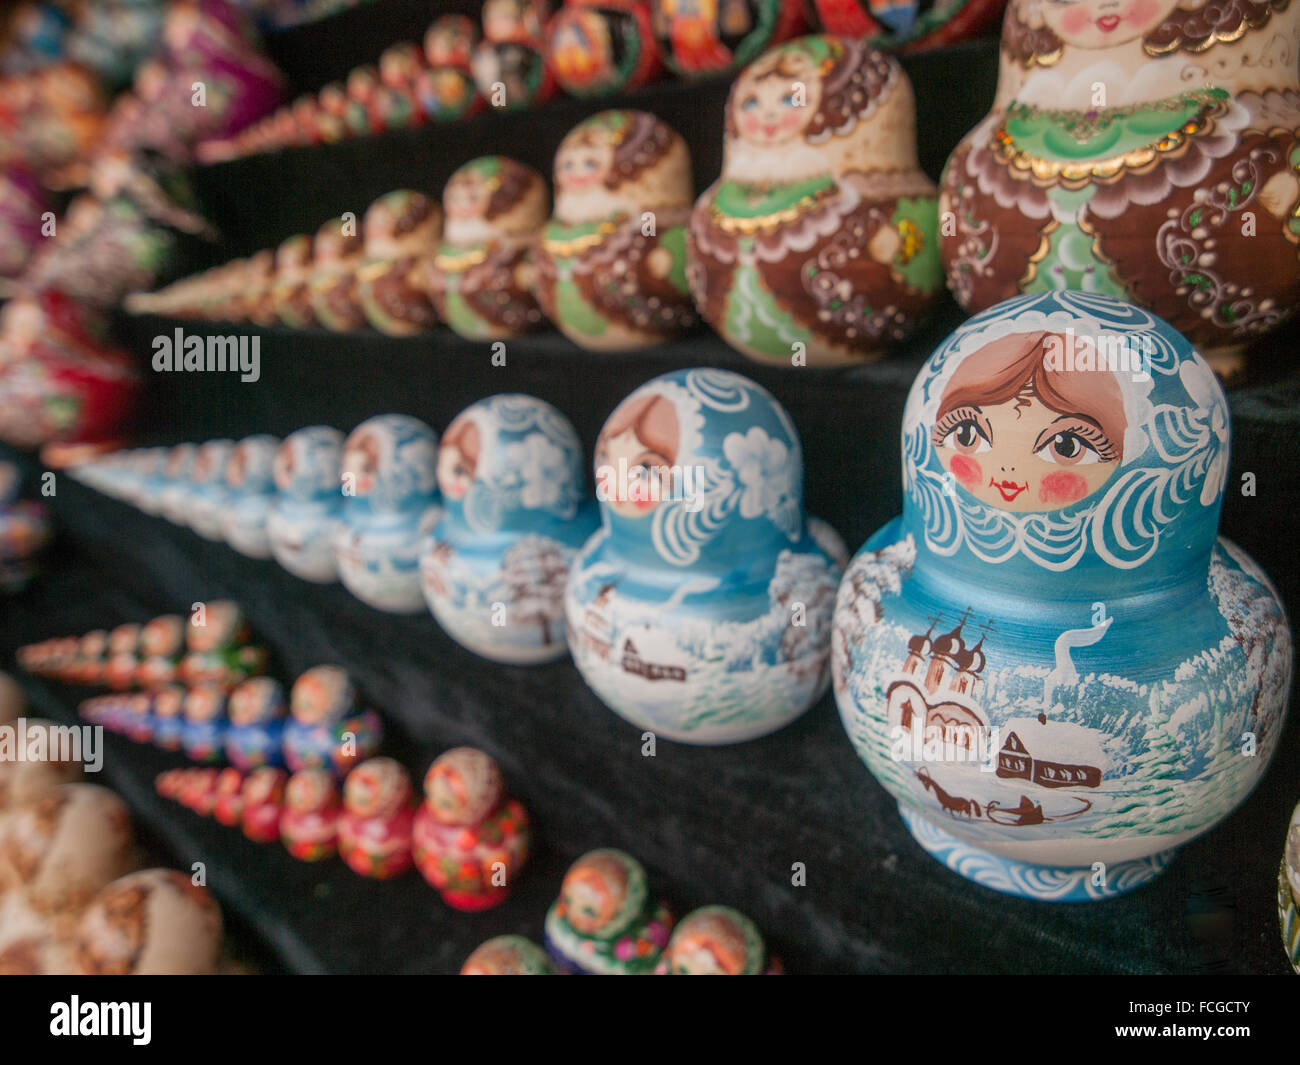 Russische Verschachtelung Puppen in verschiedenen Farben bei Izmailovsky Souvenir-Markt in Moskau. Stockfoto